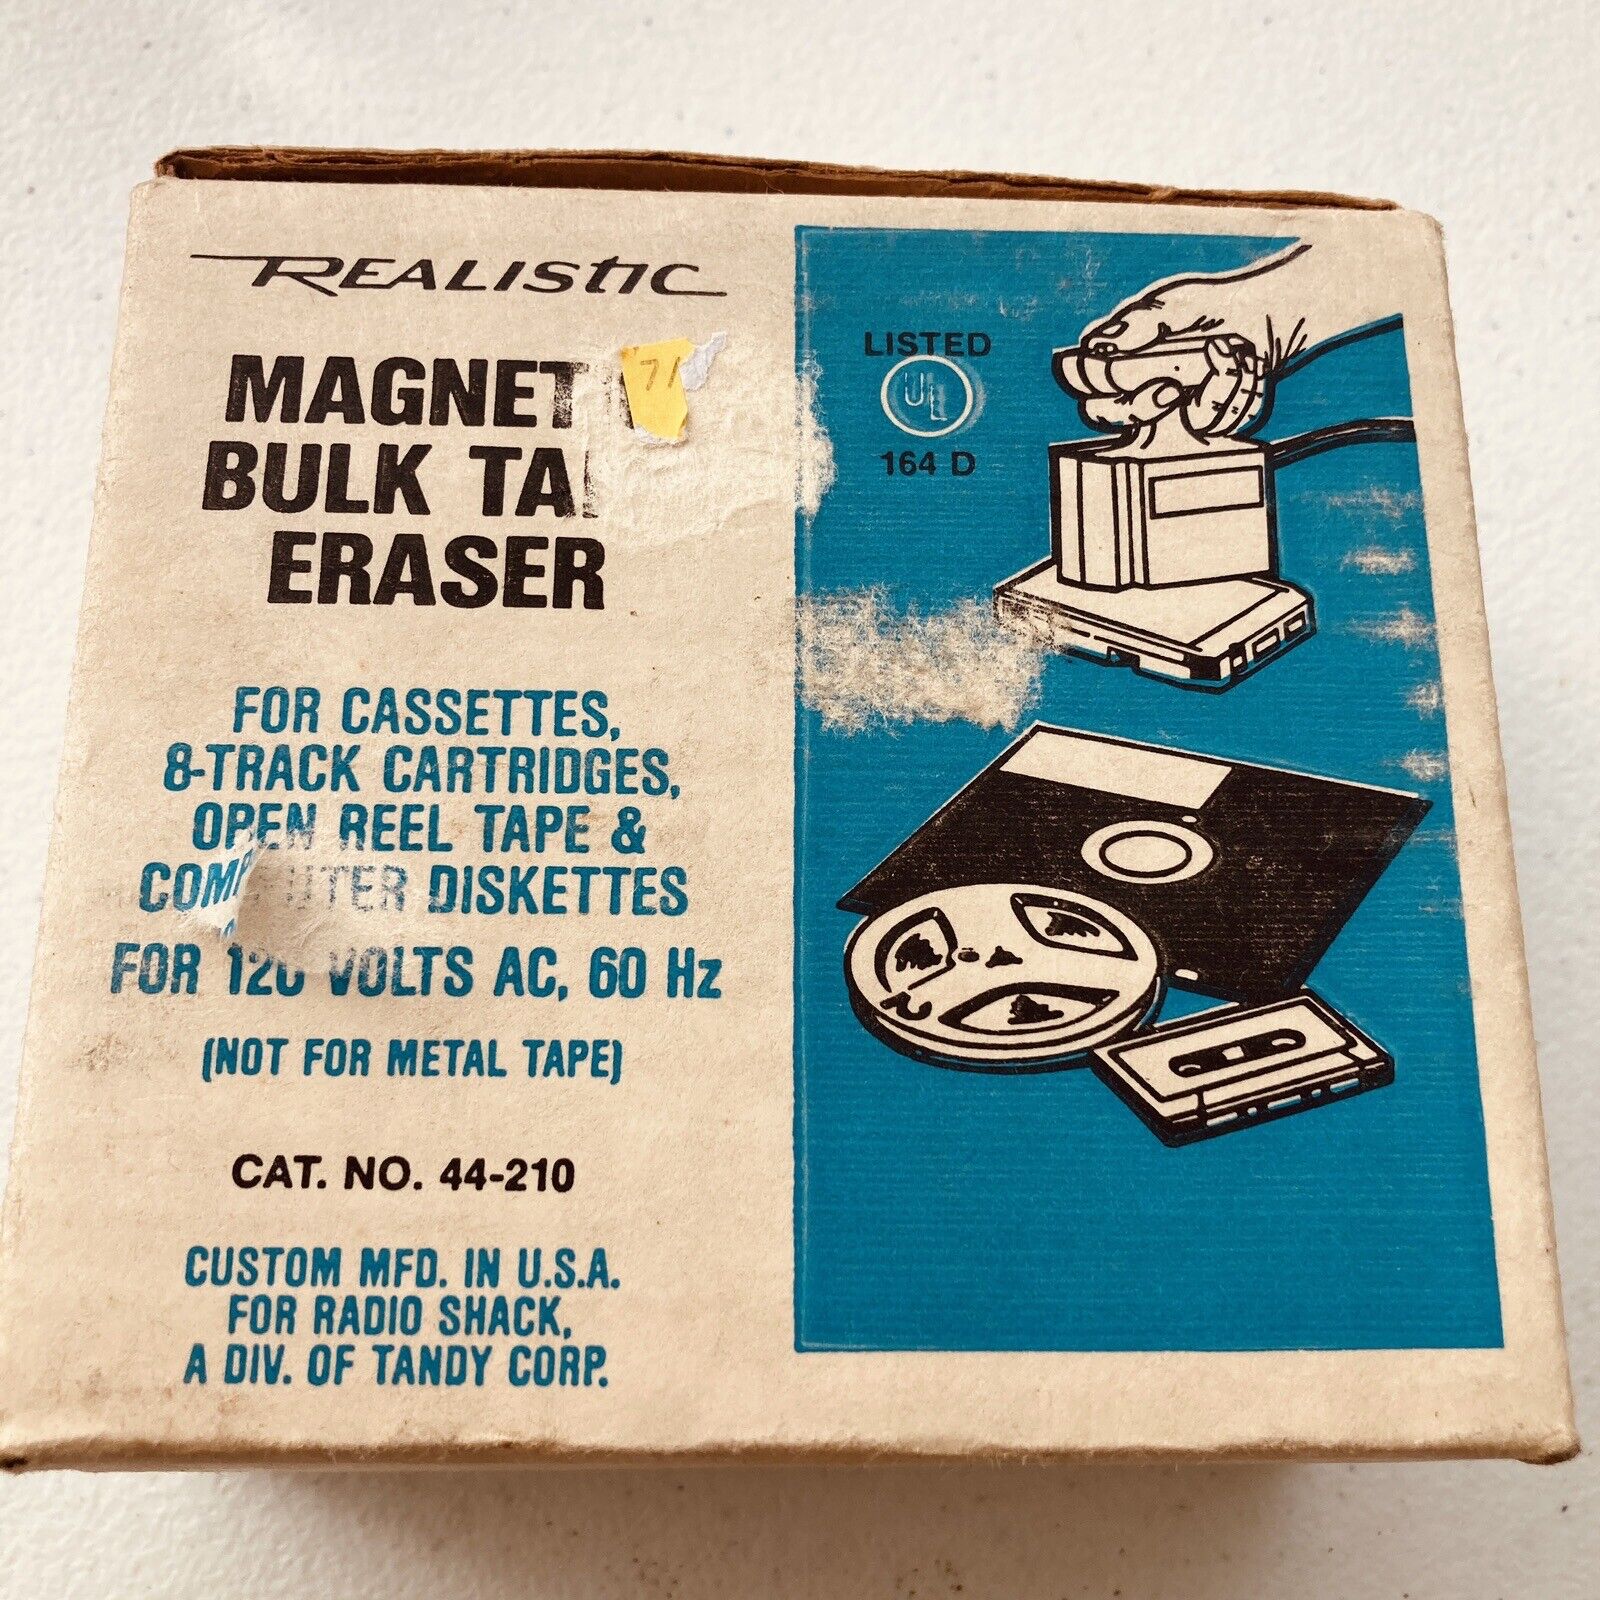 Vtg Magnetic Bulk Tape Eraser By Realistic / Radio Shack #44-210